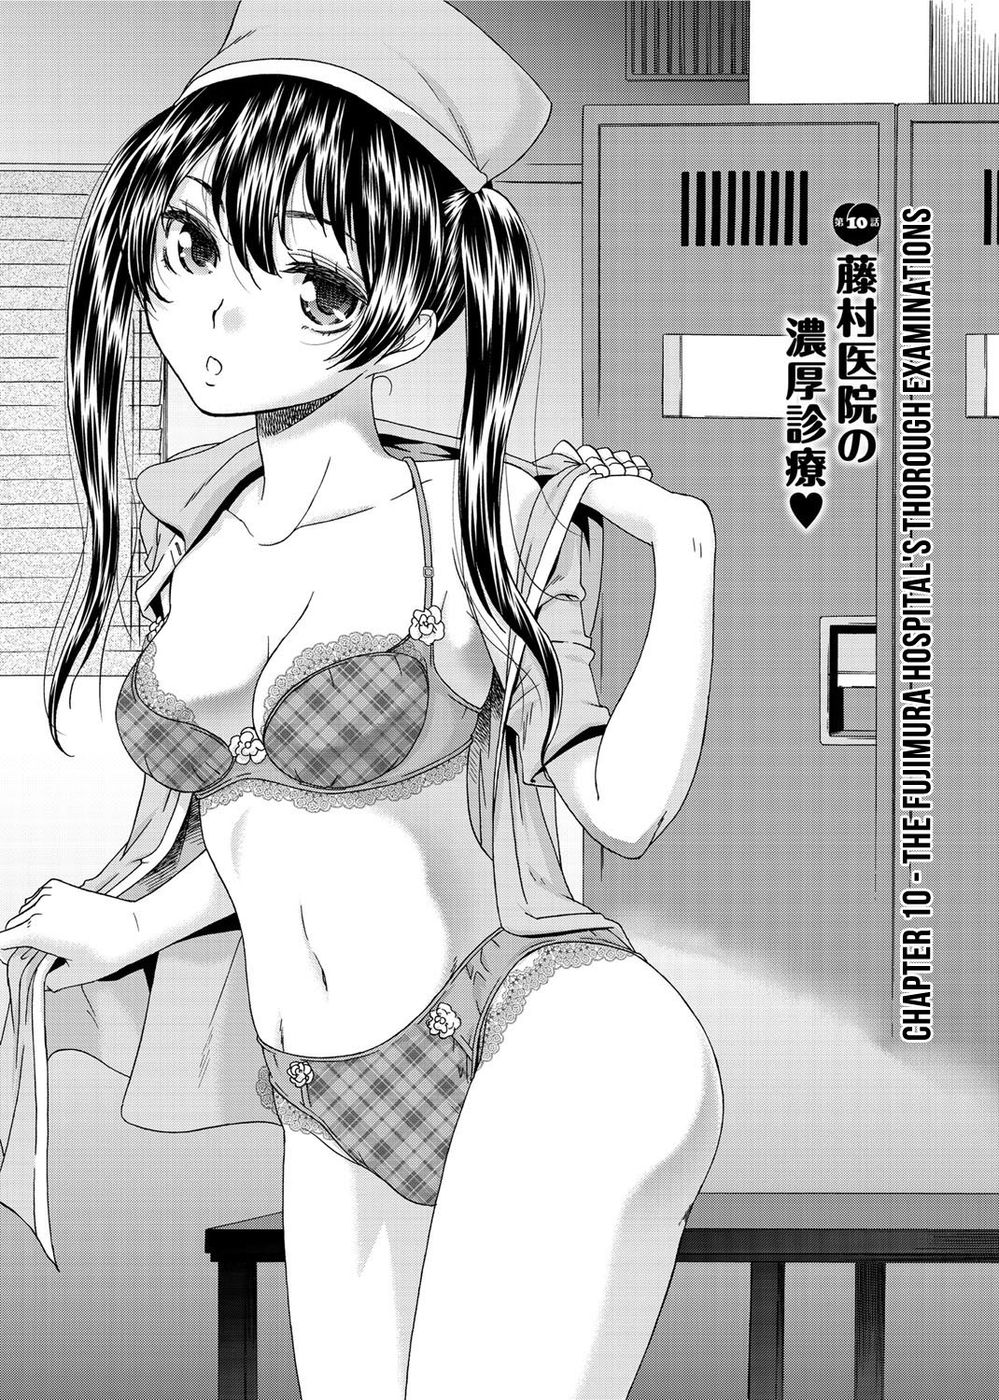 Hentai Manga Comic-Momoiro Nurse-Chapter 10 - The fujimura hospital's thorough examinations-1